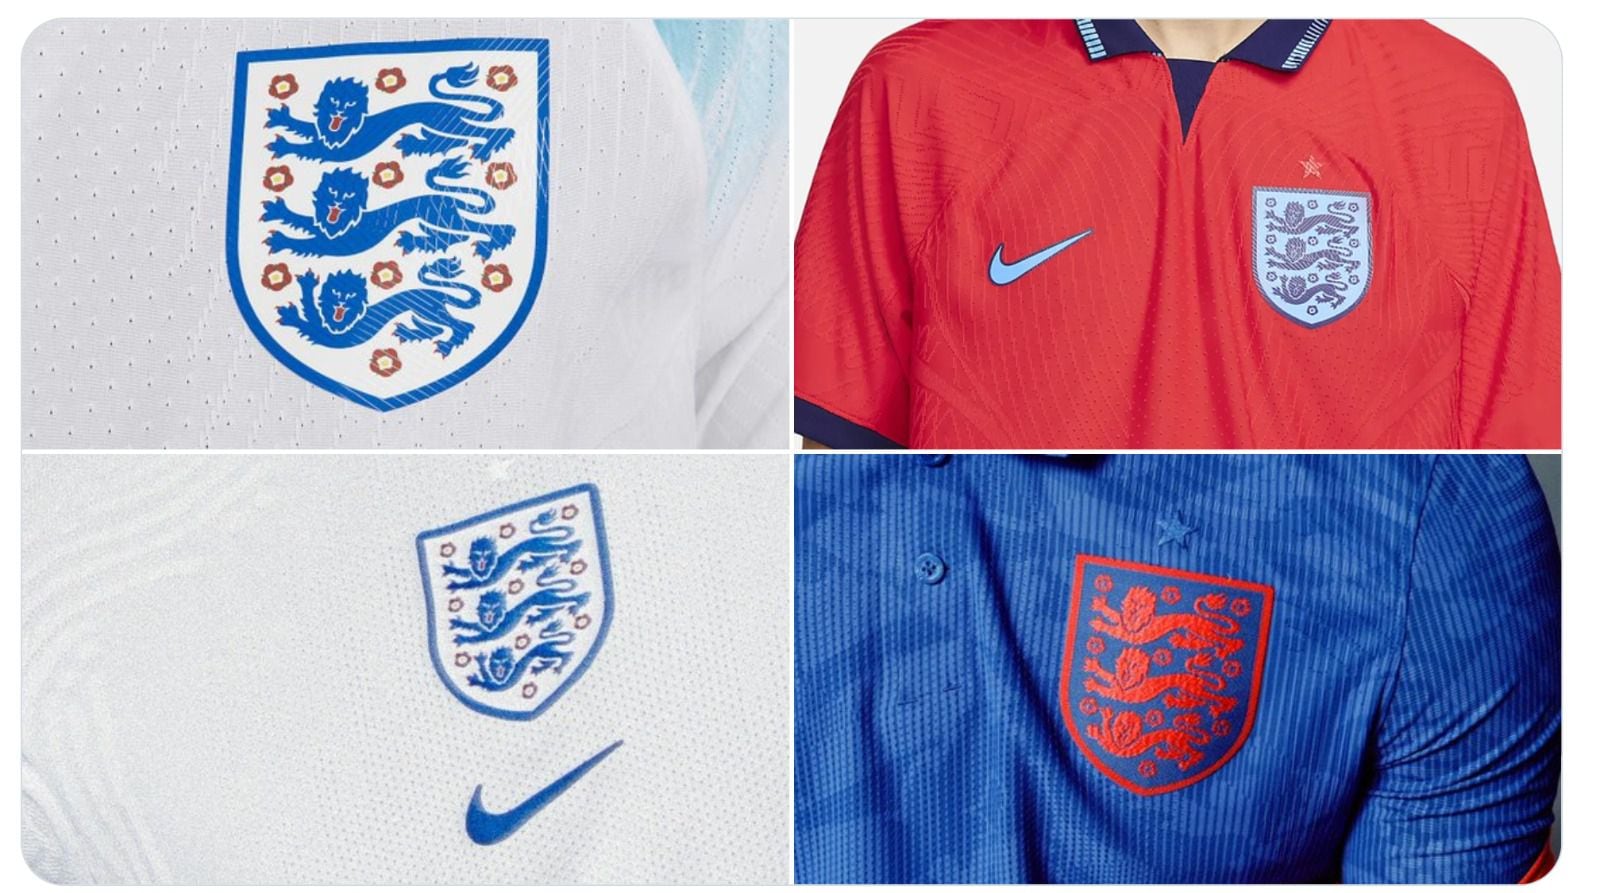 Camisetas Nike de Inglaterra sin estrellas